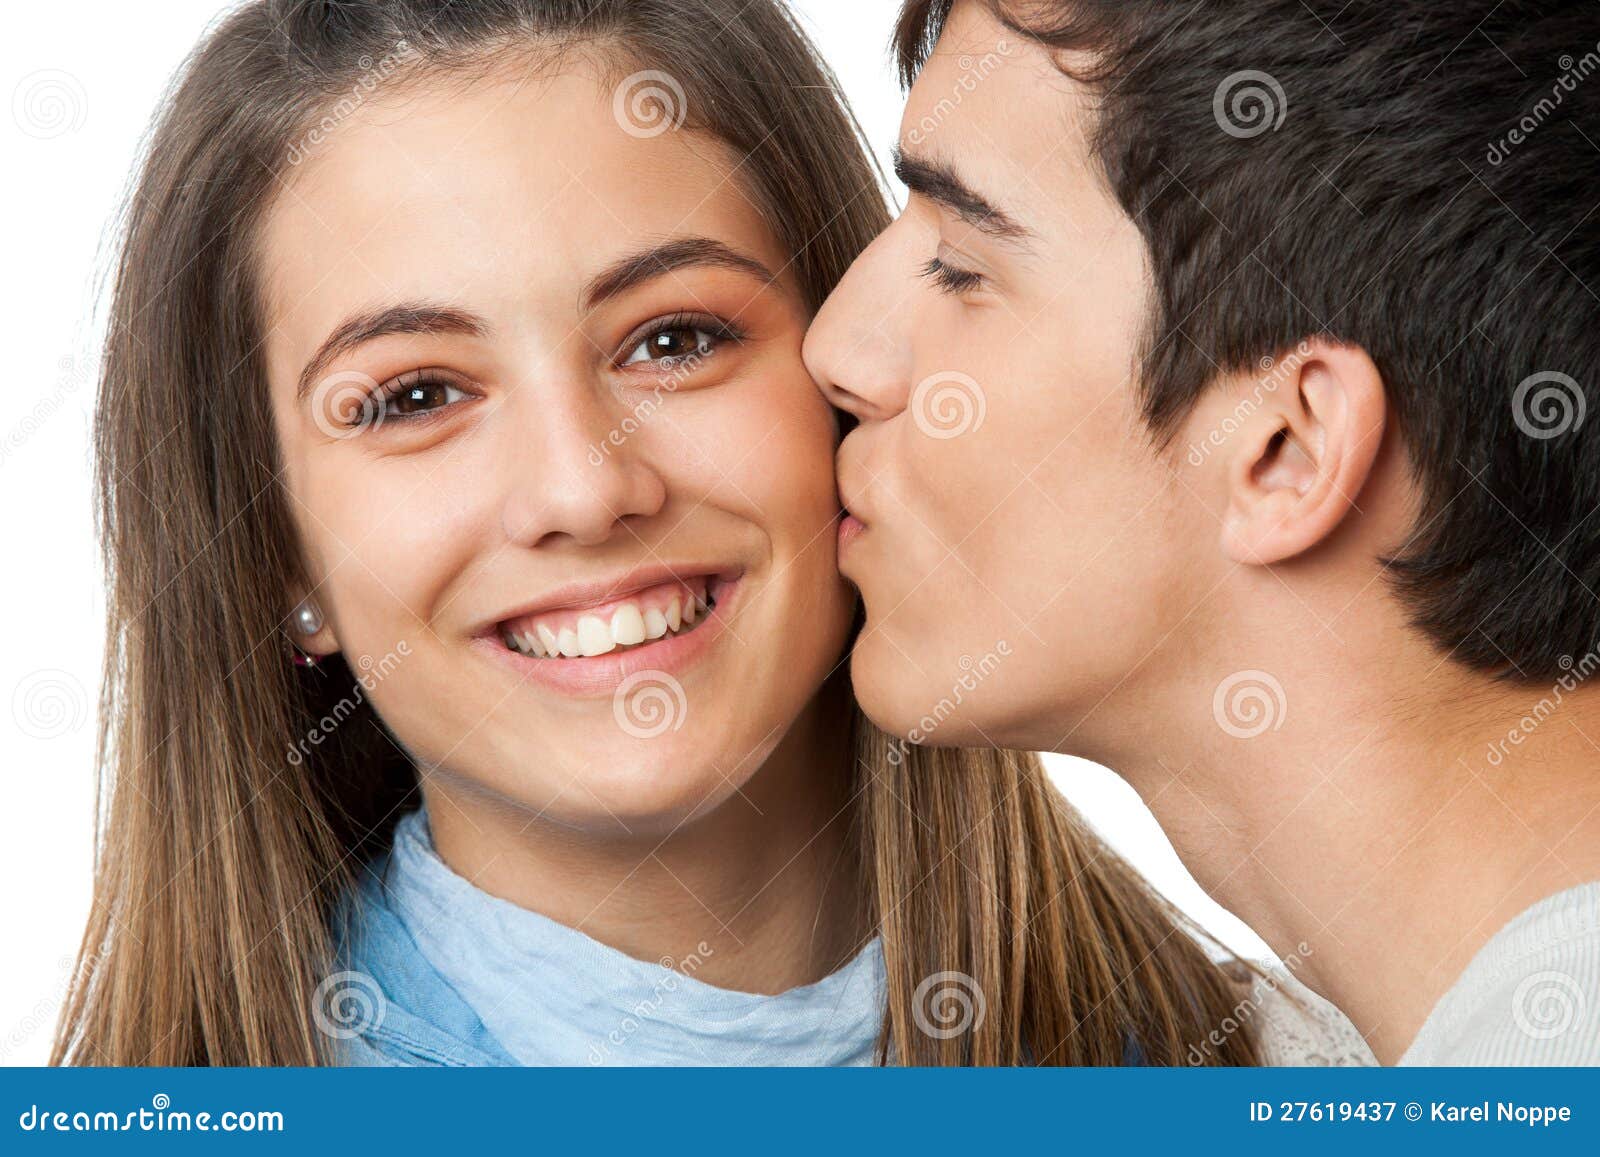 kissing his girlfriend naked Sex Pics Hd